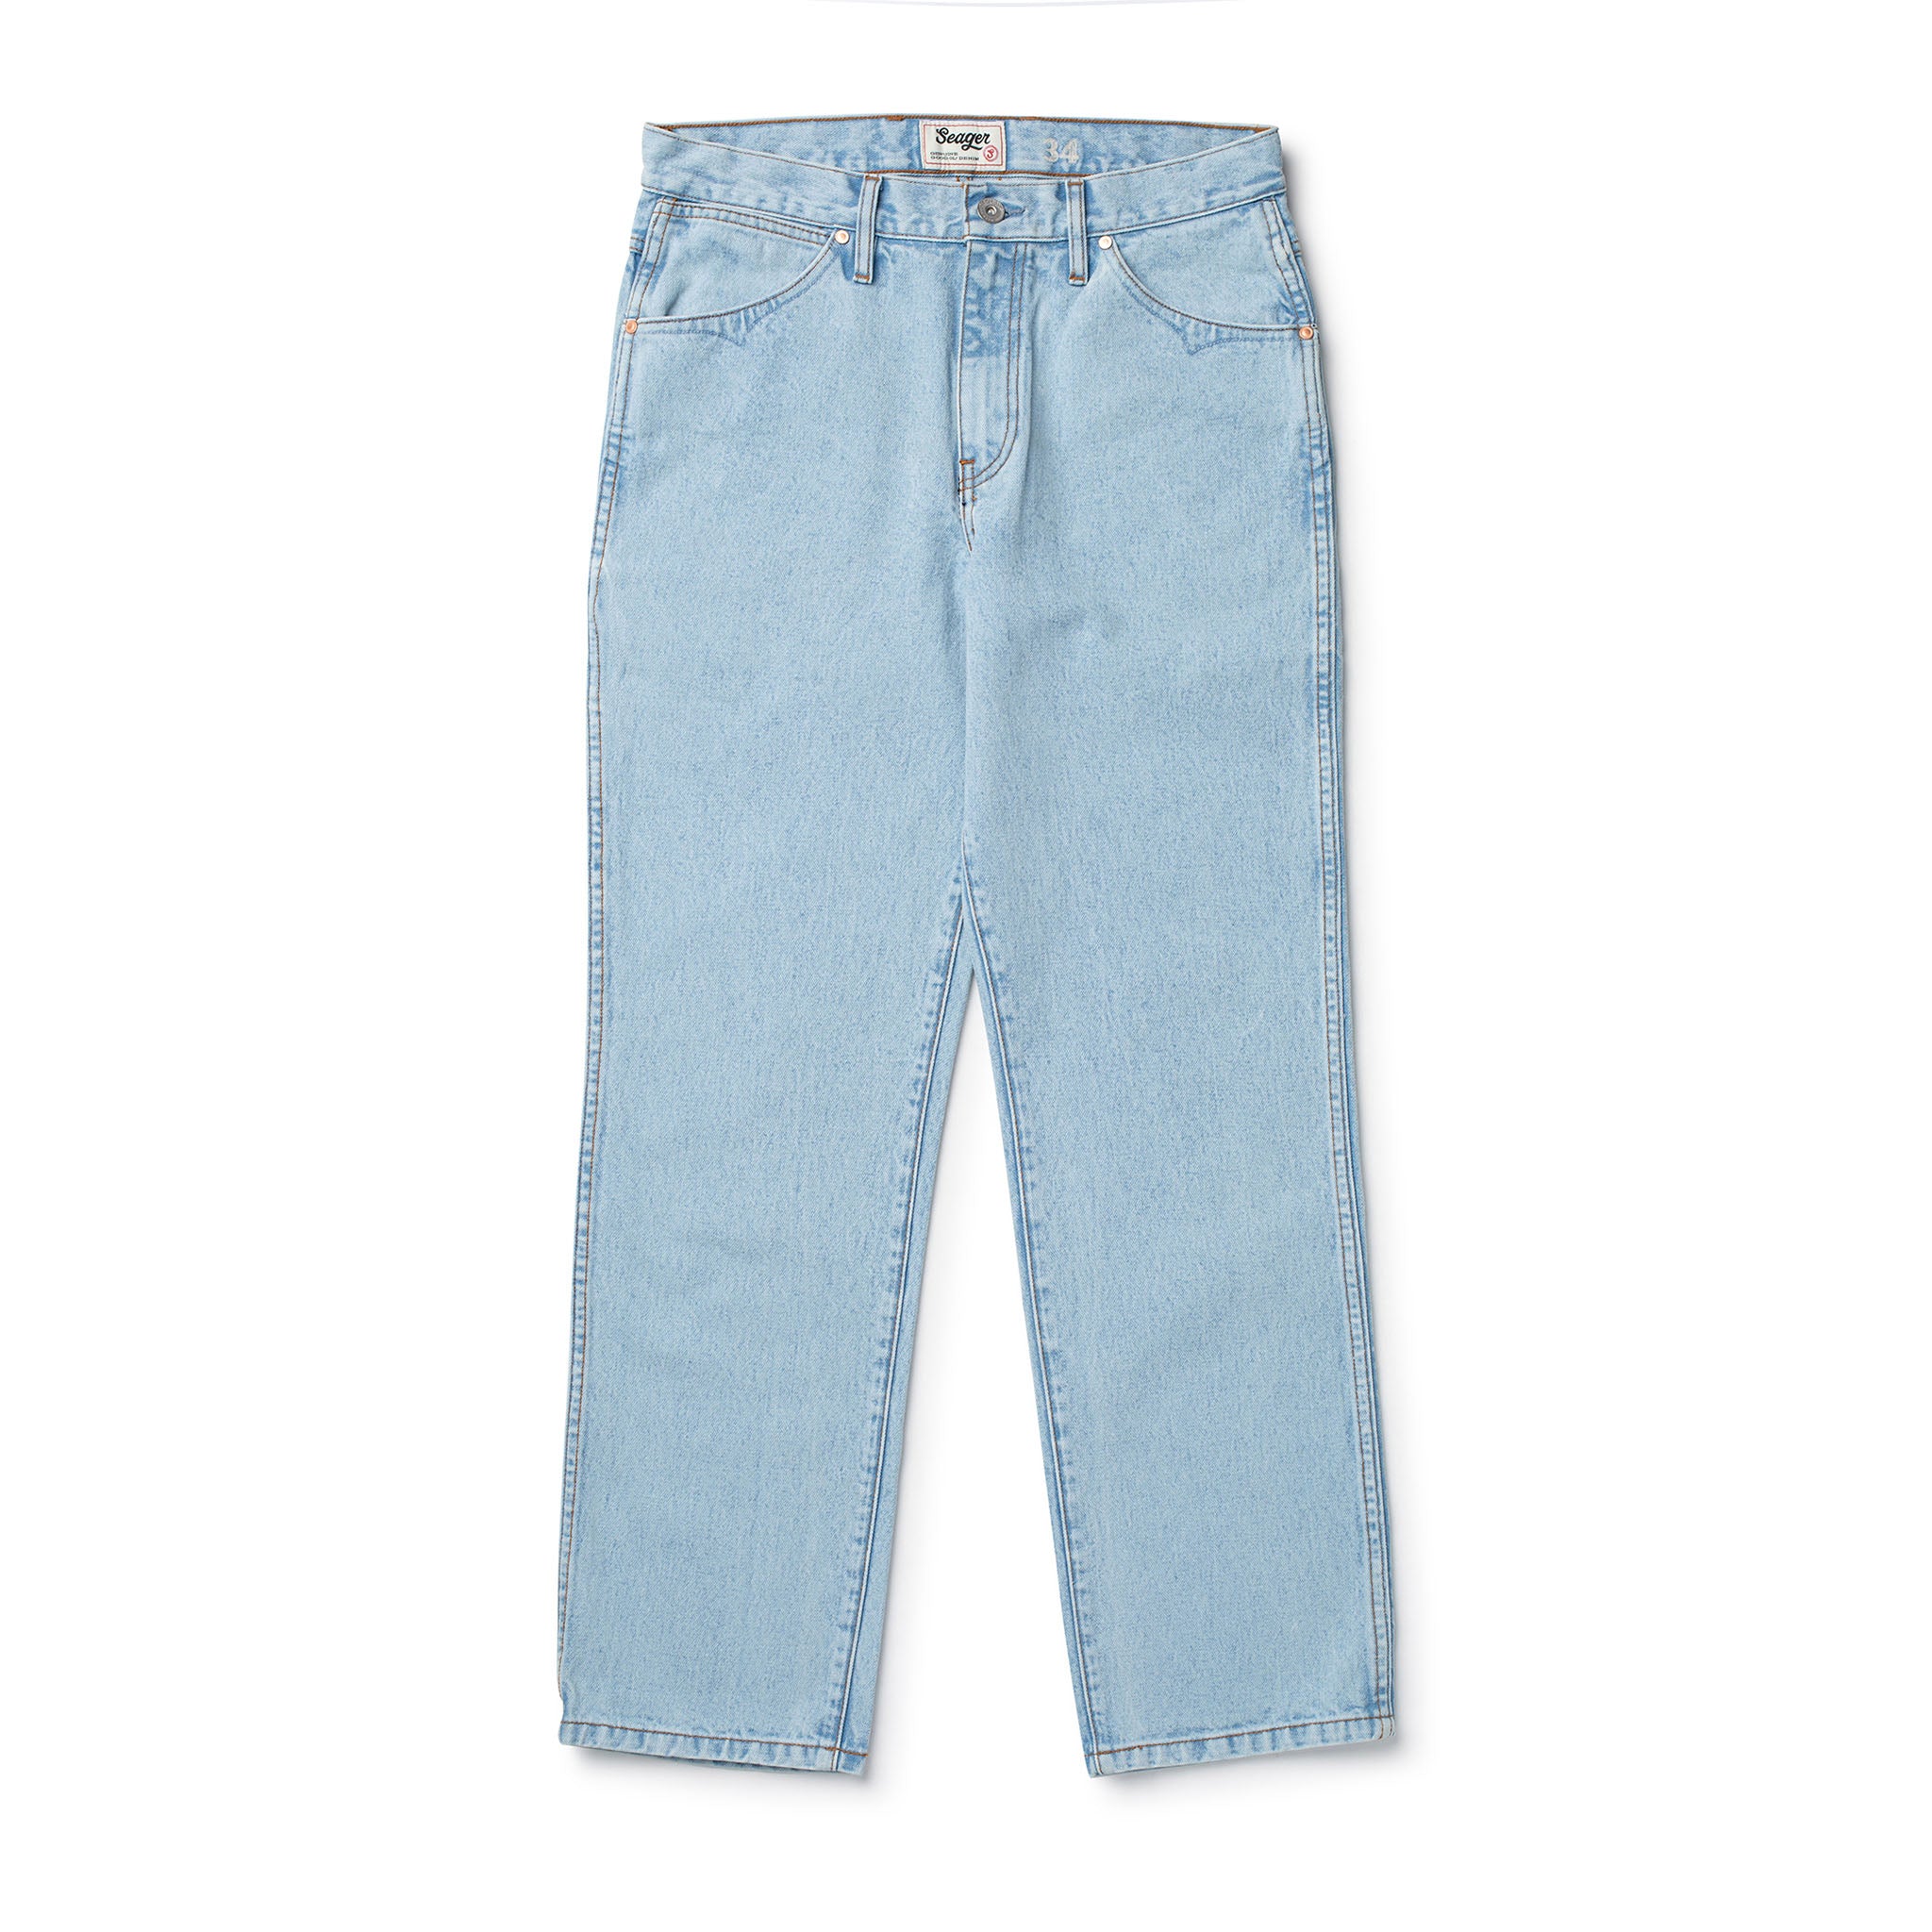 Super Skinny High Jeans - Light blue - Ladies | H&M IN